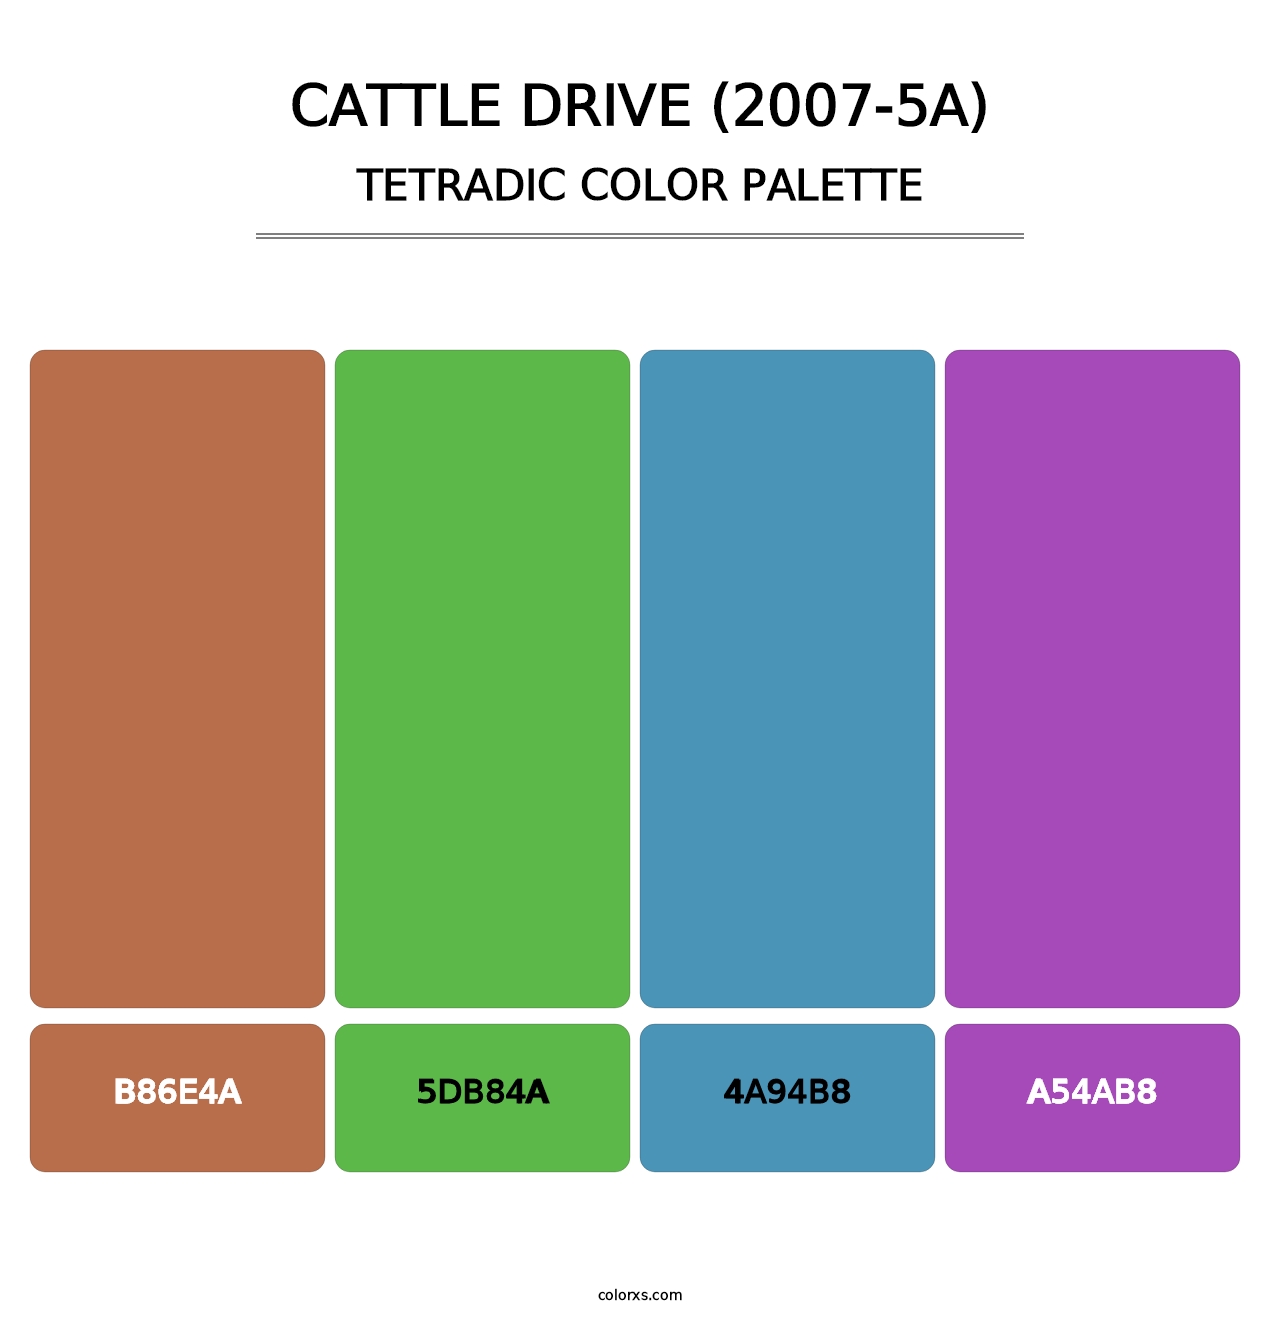 Cattle Drive (2007-5A) - Tetradic Color Palette